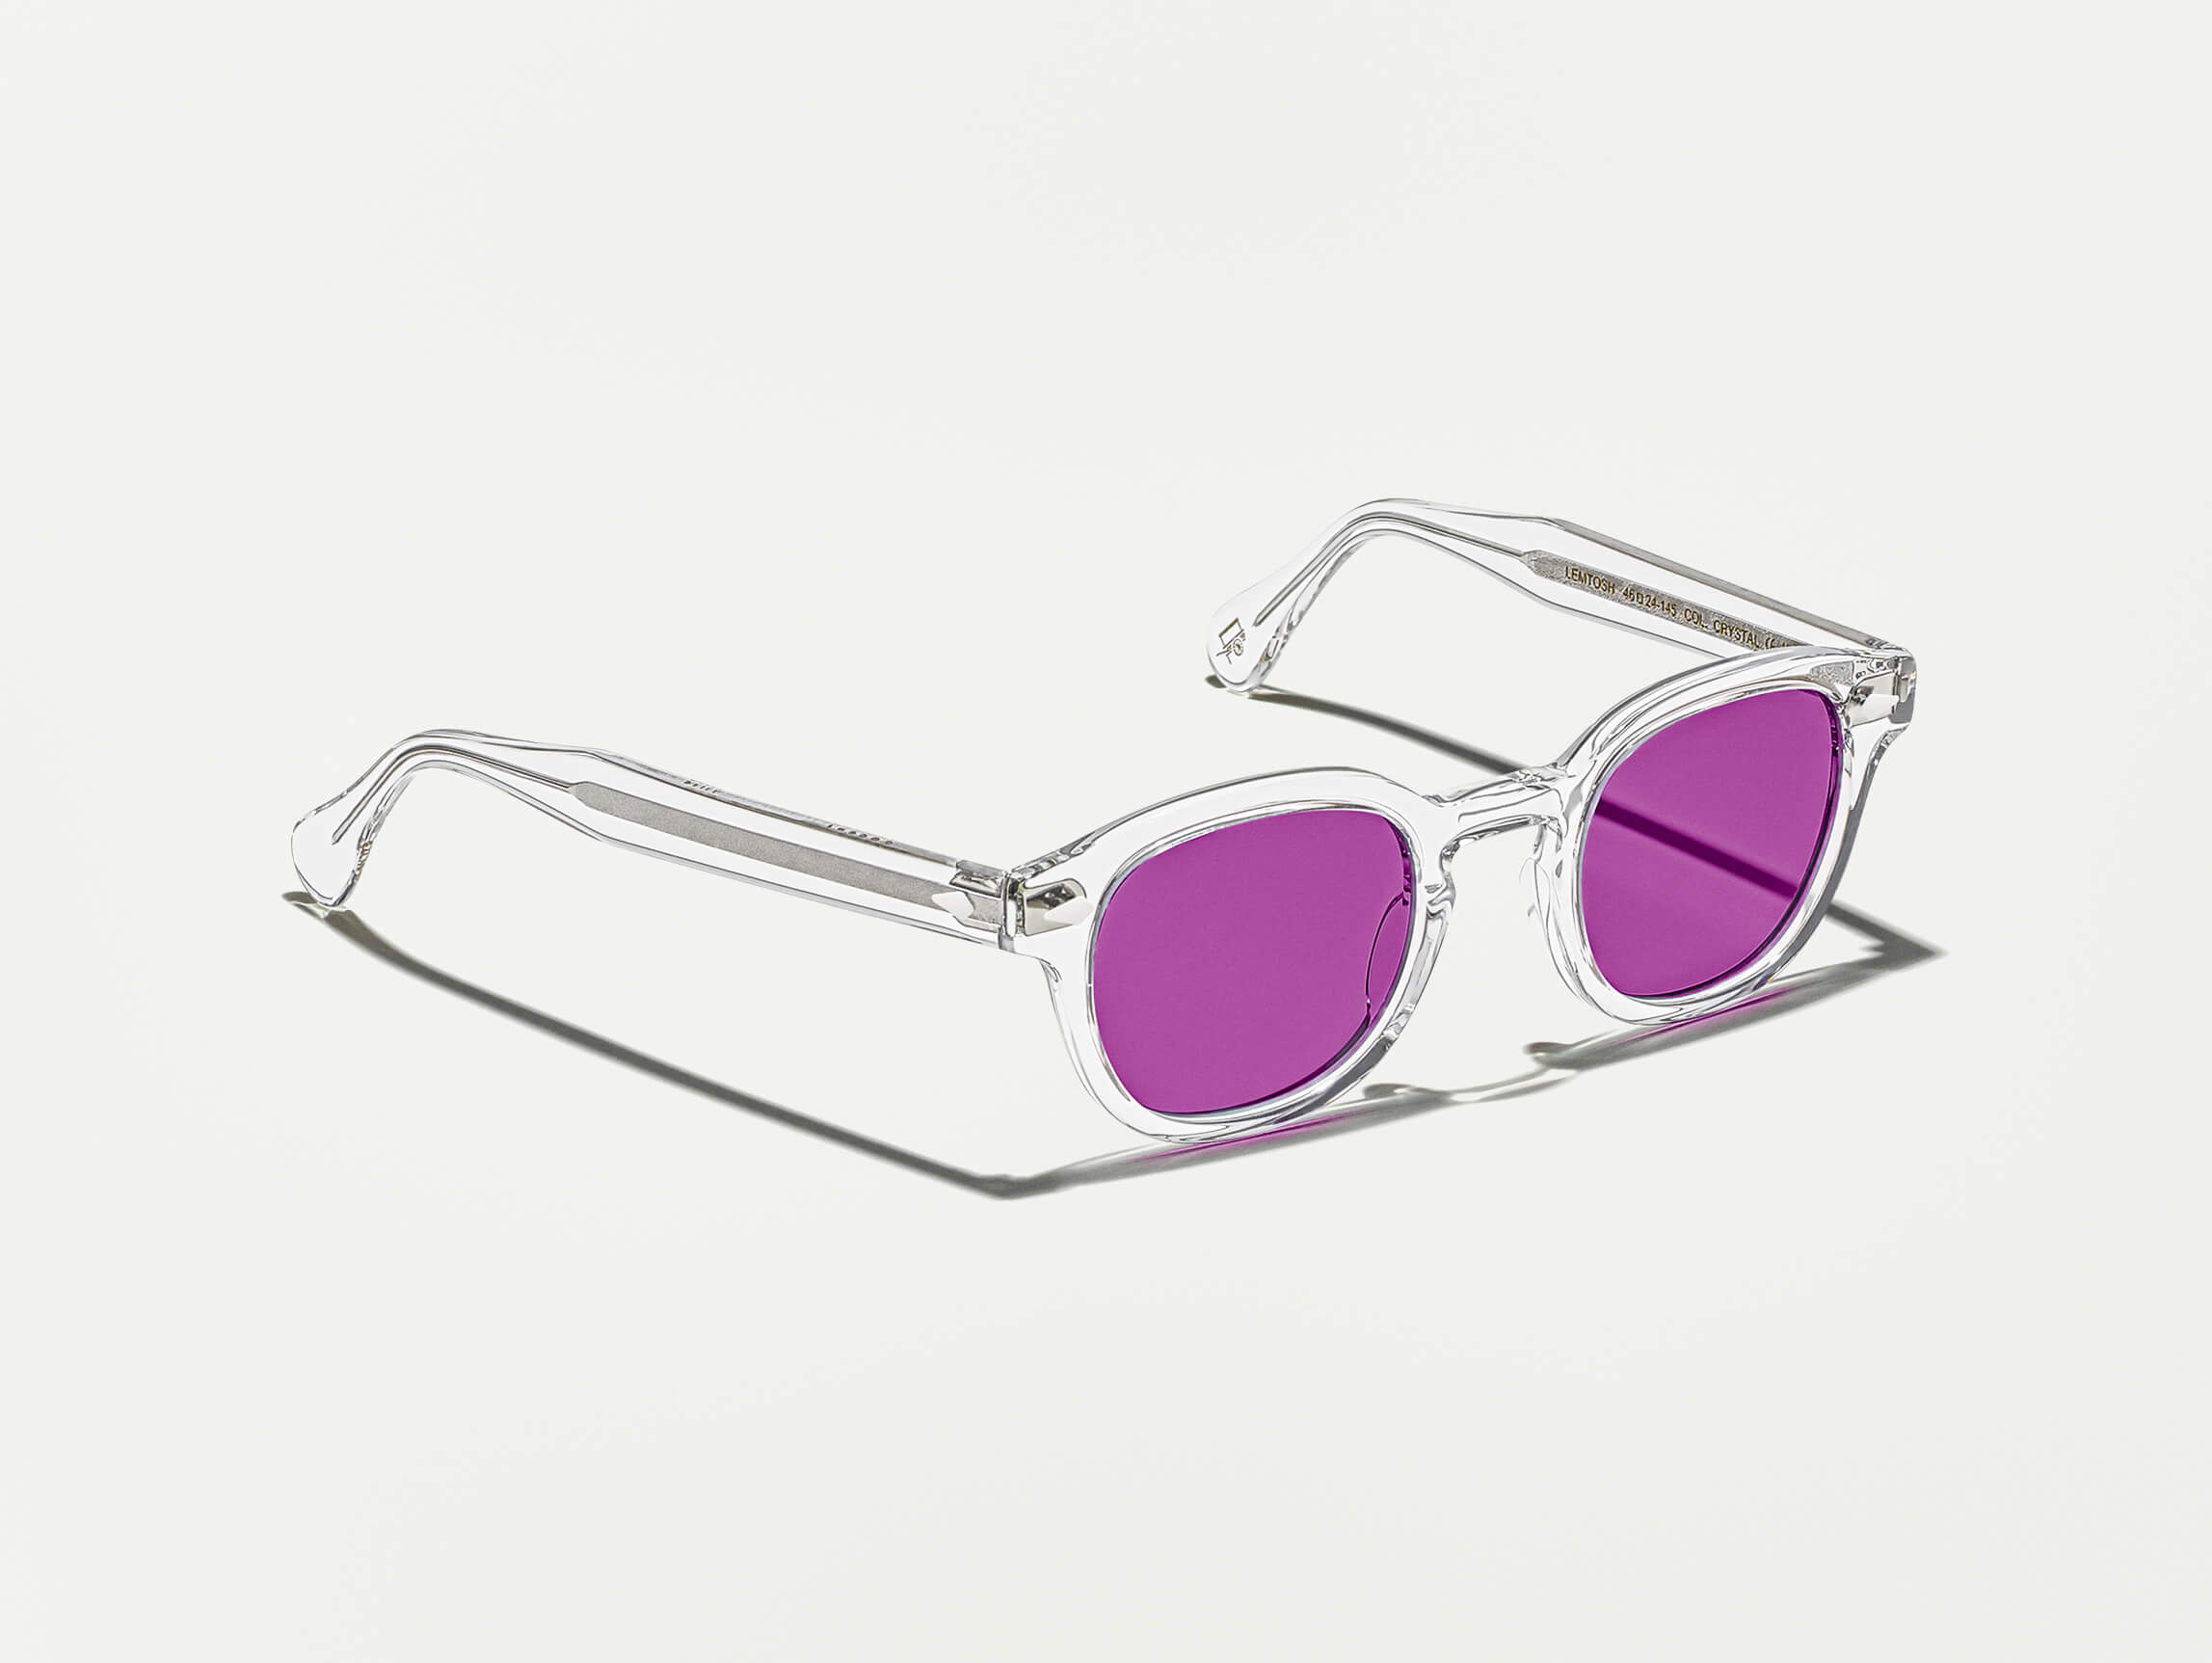 The LEMTOSH Crystal with Purple Nurple Tinted Lenses